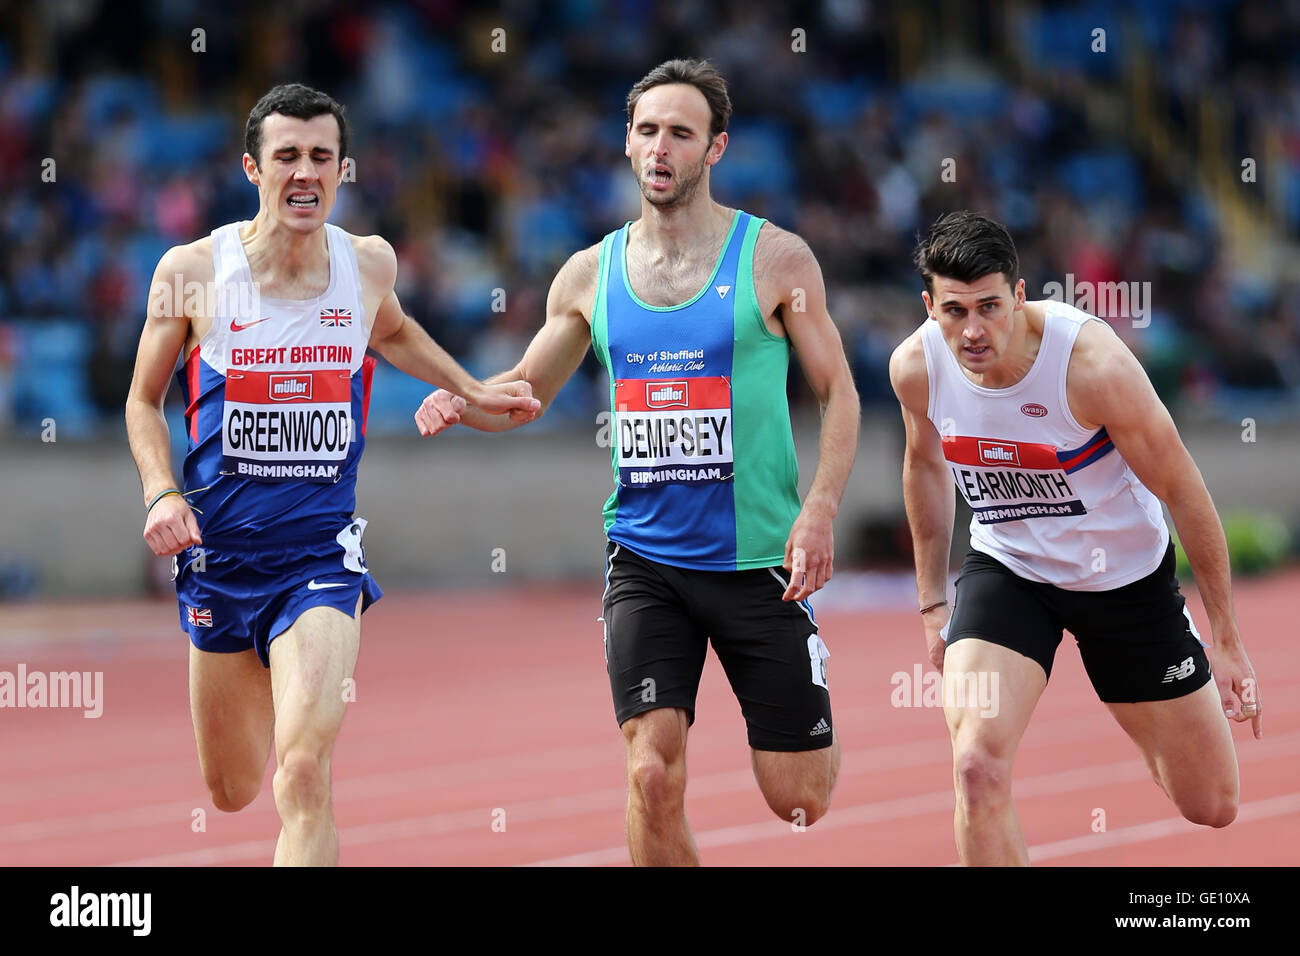 Ben GREENWOOD,David DEMPSEY and Guy LEARMONTH crossing the finish line in the Men's 800m Heat 4; 2016 British Championships; Birmingham Alexander Stadium UK. Stock Photo